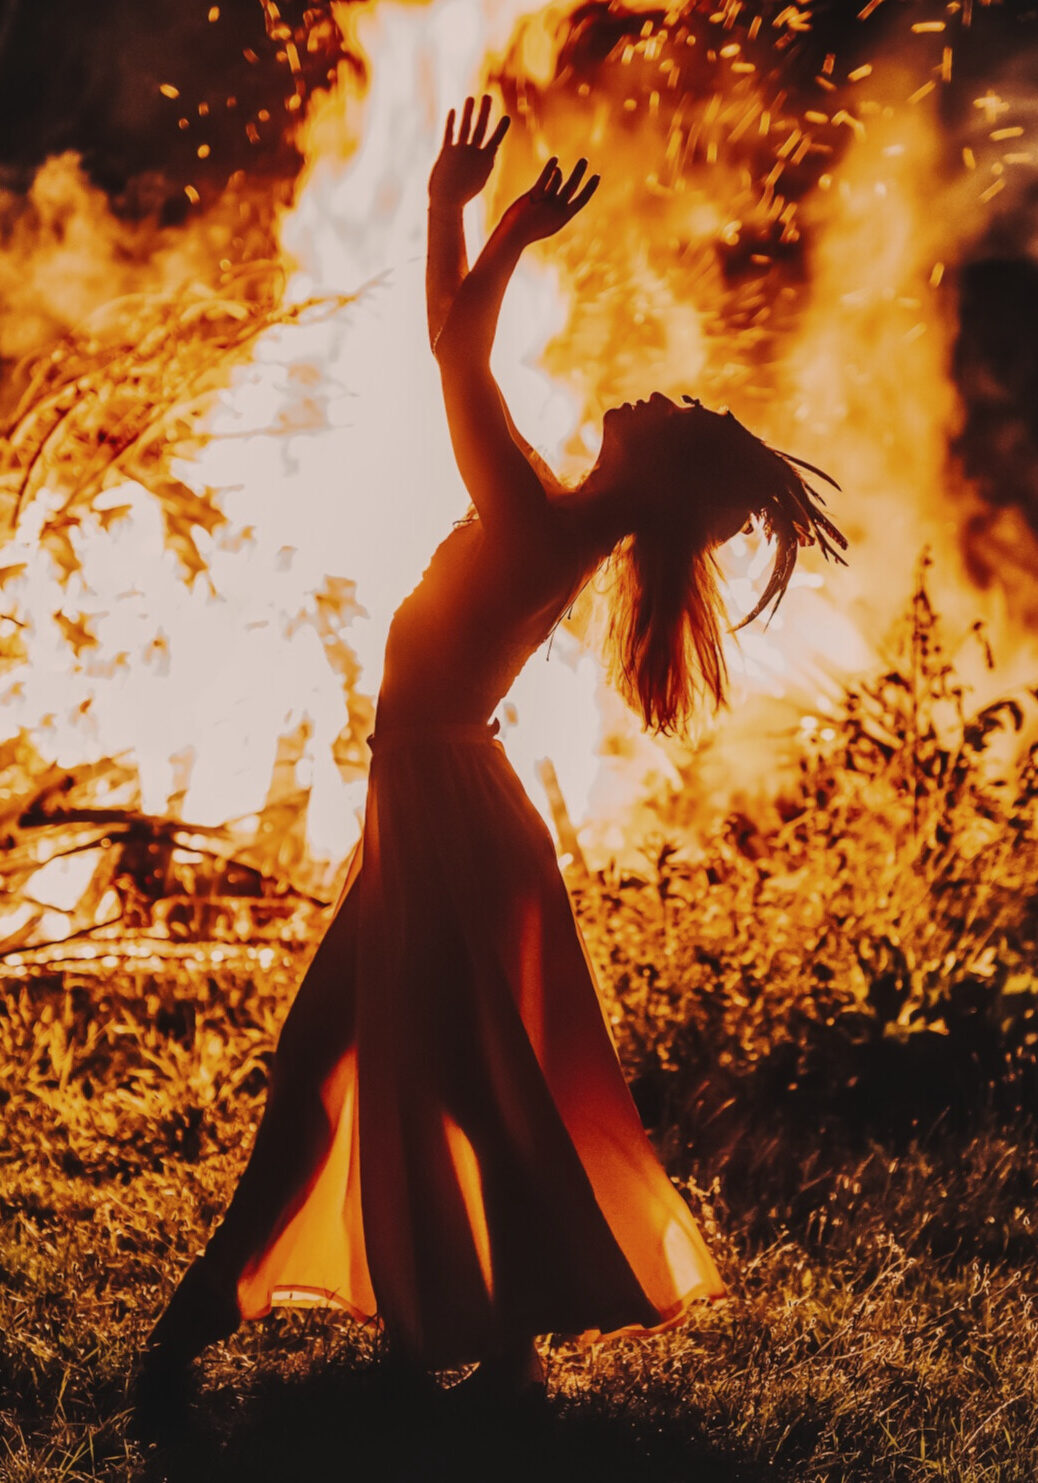 Dancing Woman Fire - Edited